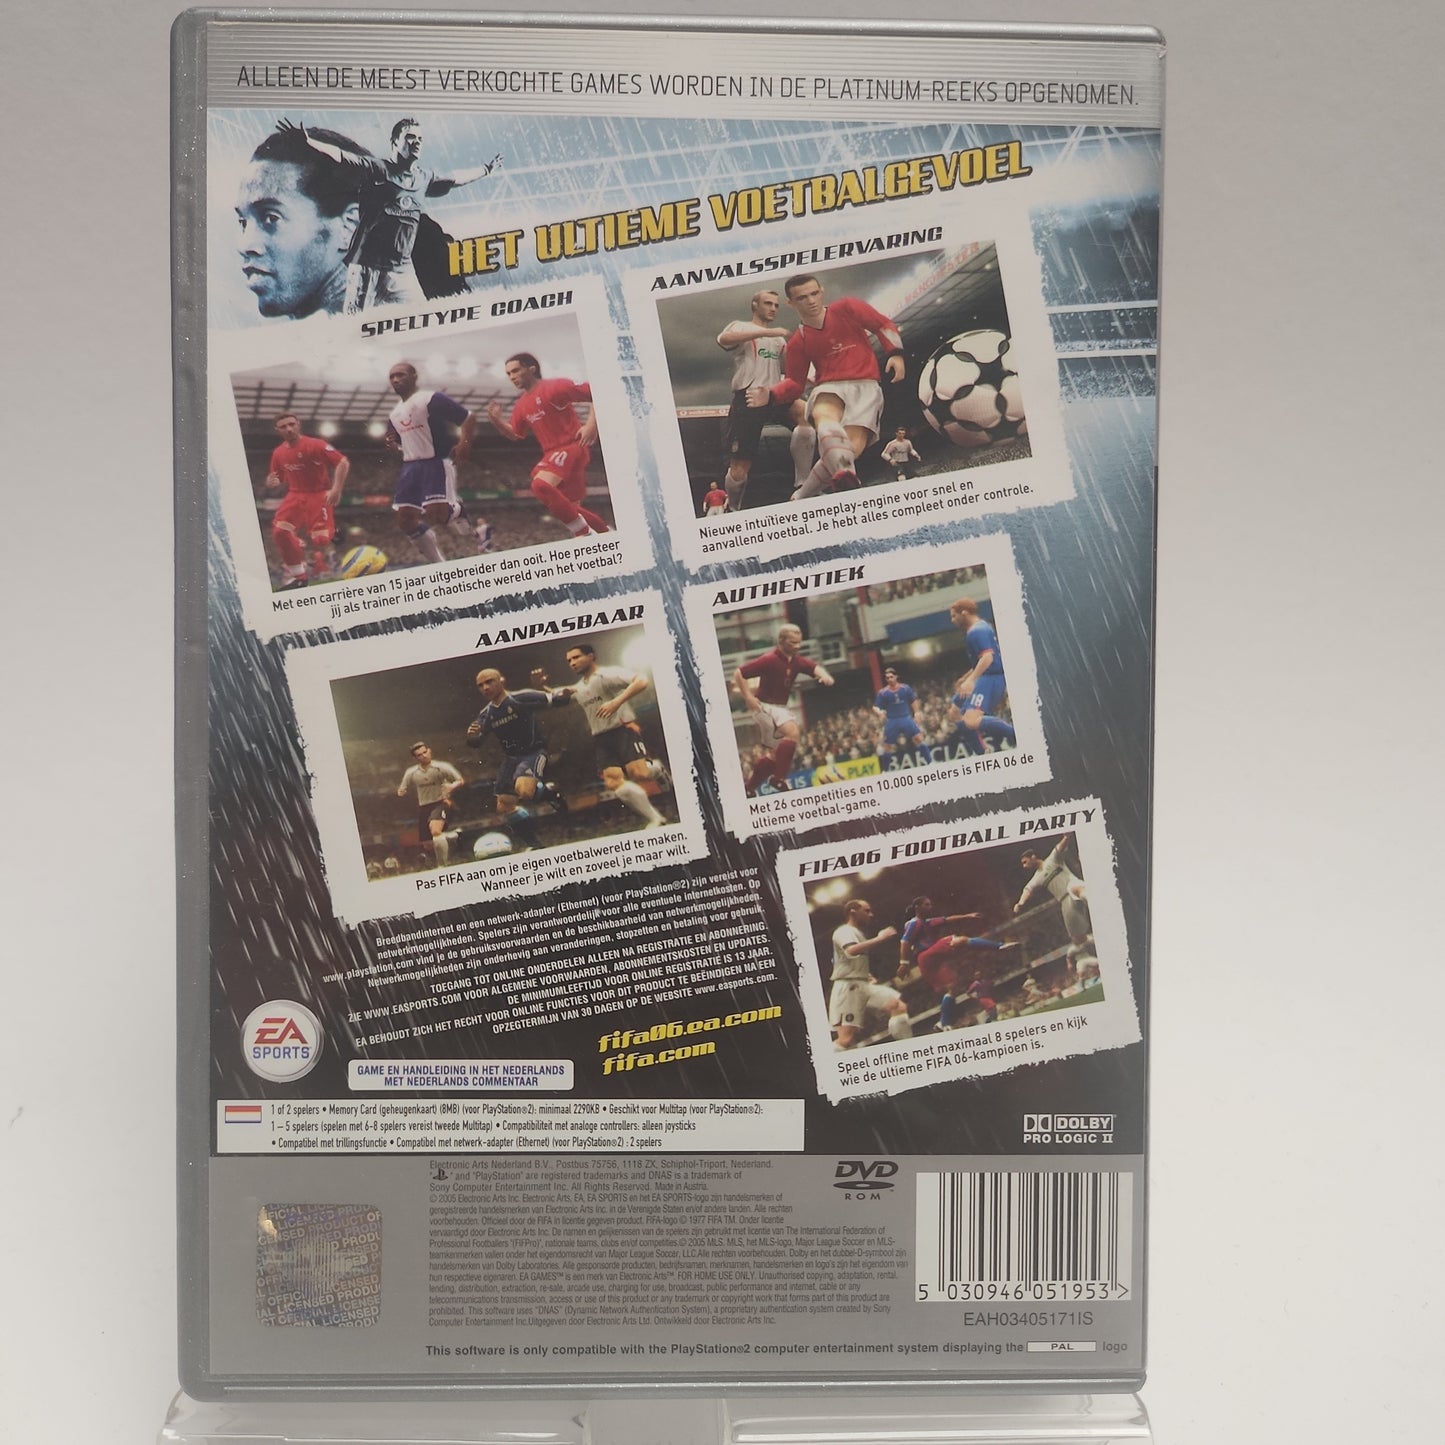 FIFA 06 Platinum Edition Playstation 2